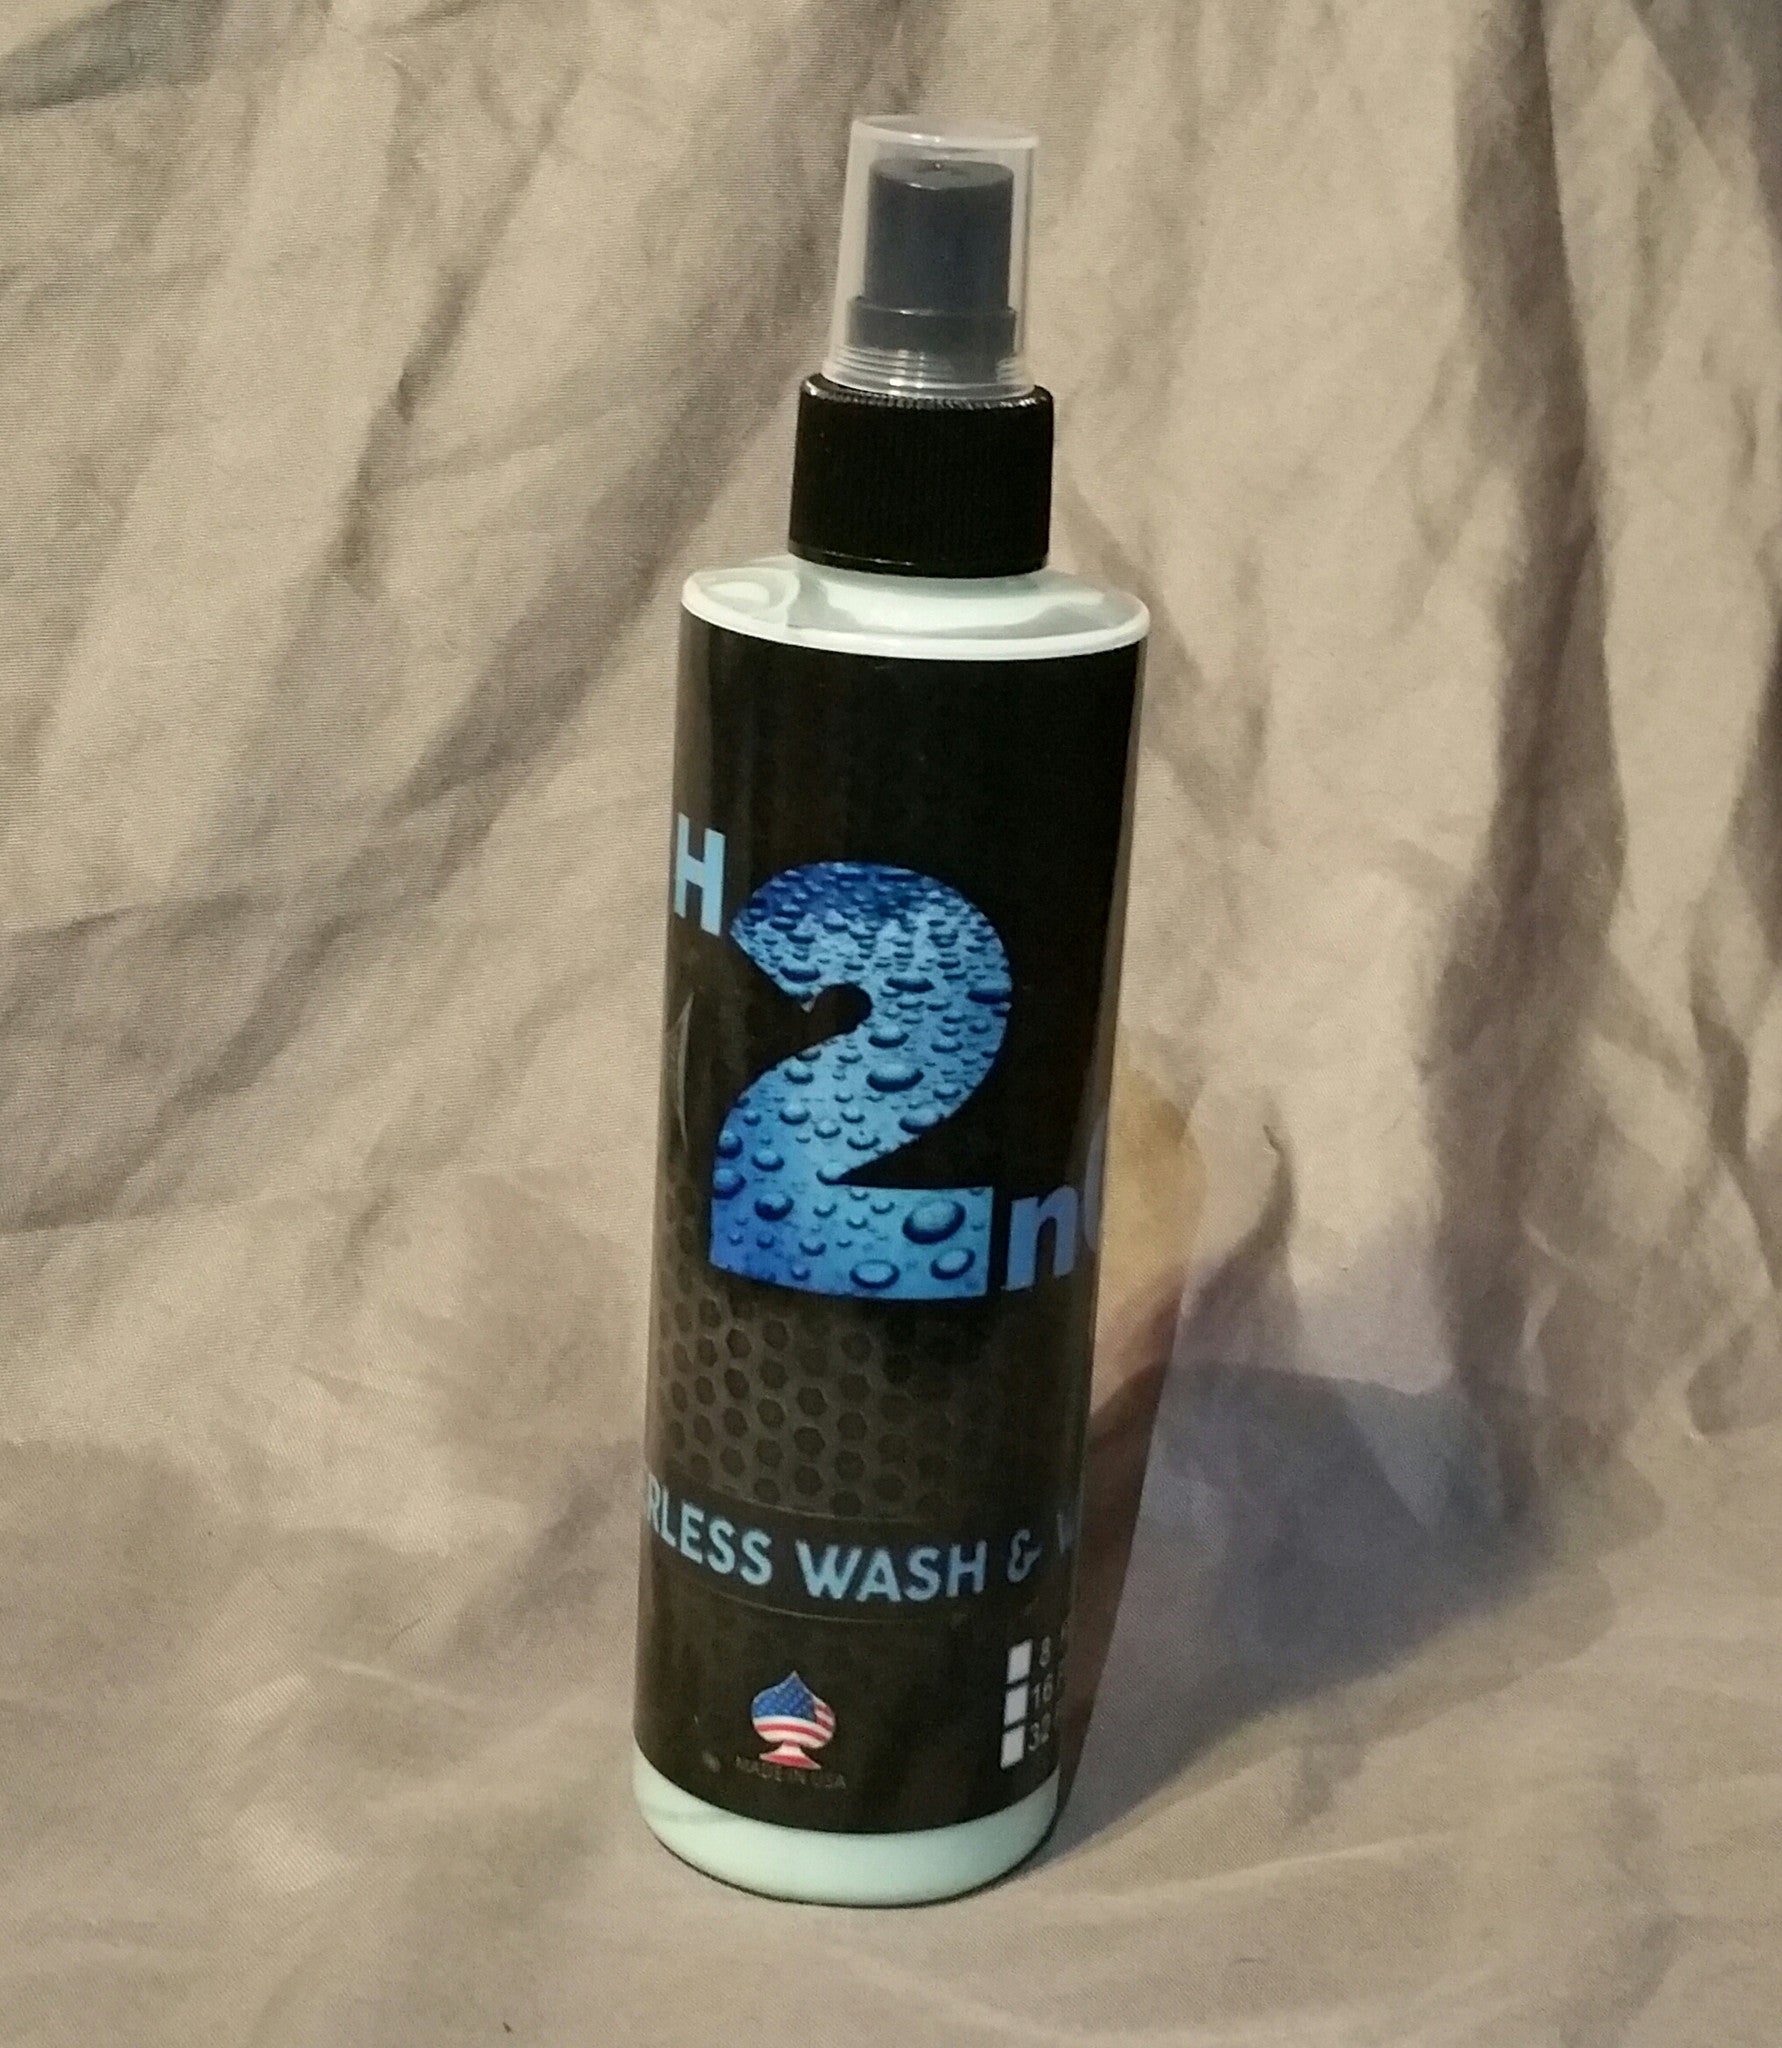 H2nO Waterless Wash and Wax – Killerwaxx